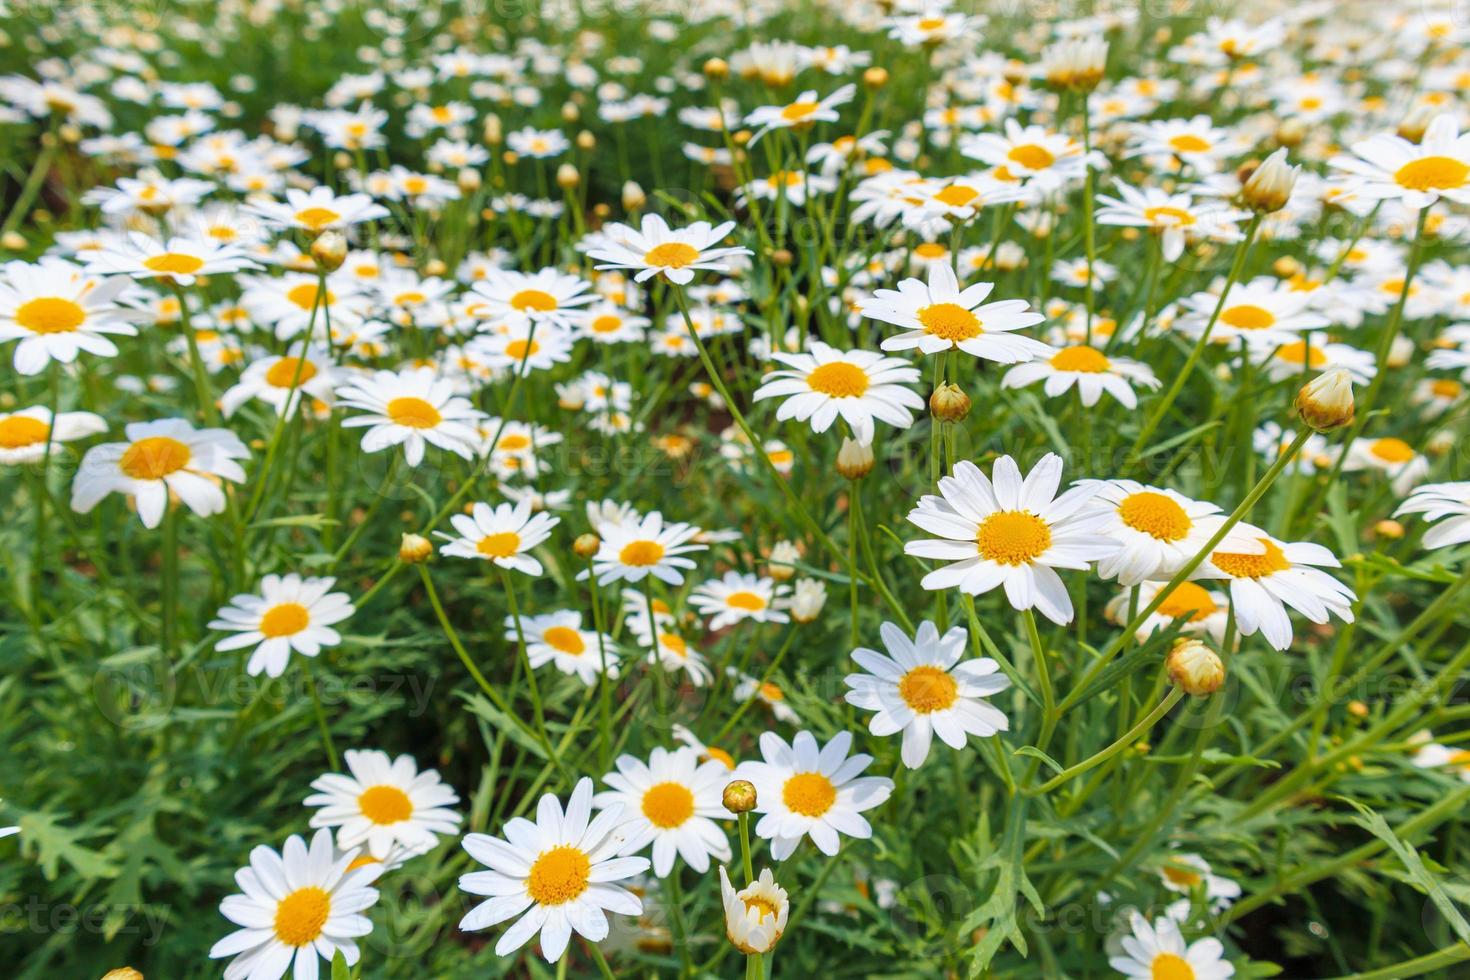 lindo campo de flores de margarida de camomila branca no prado verde foto